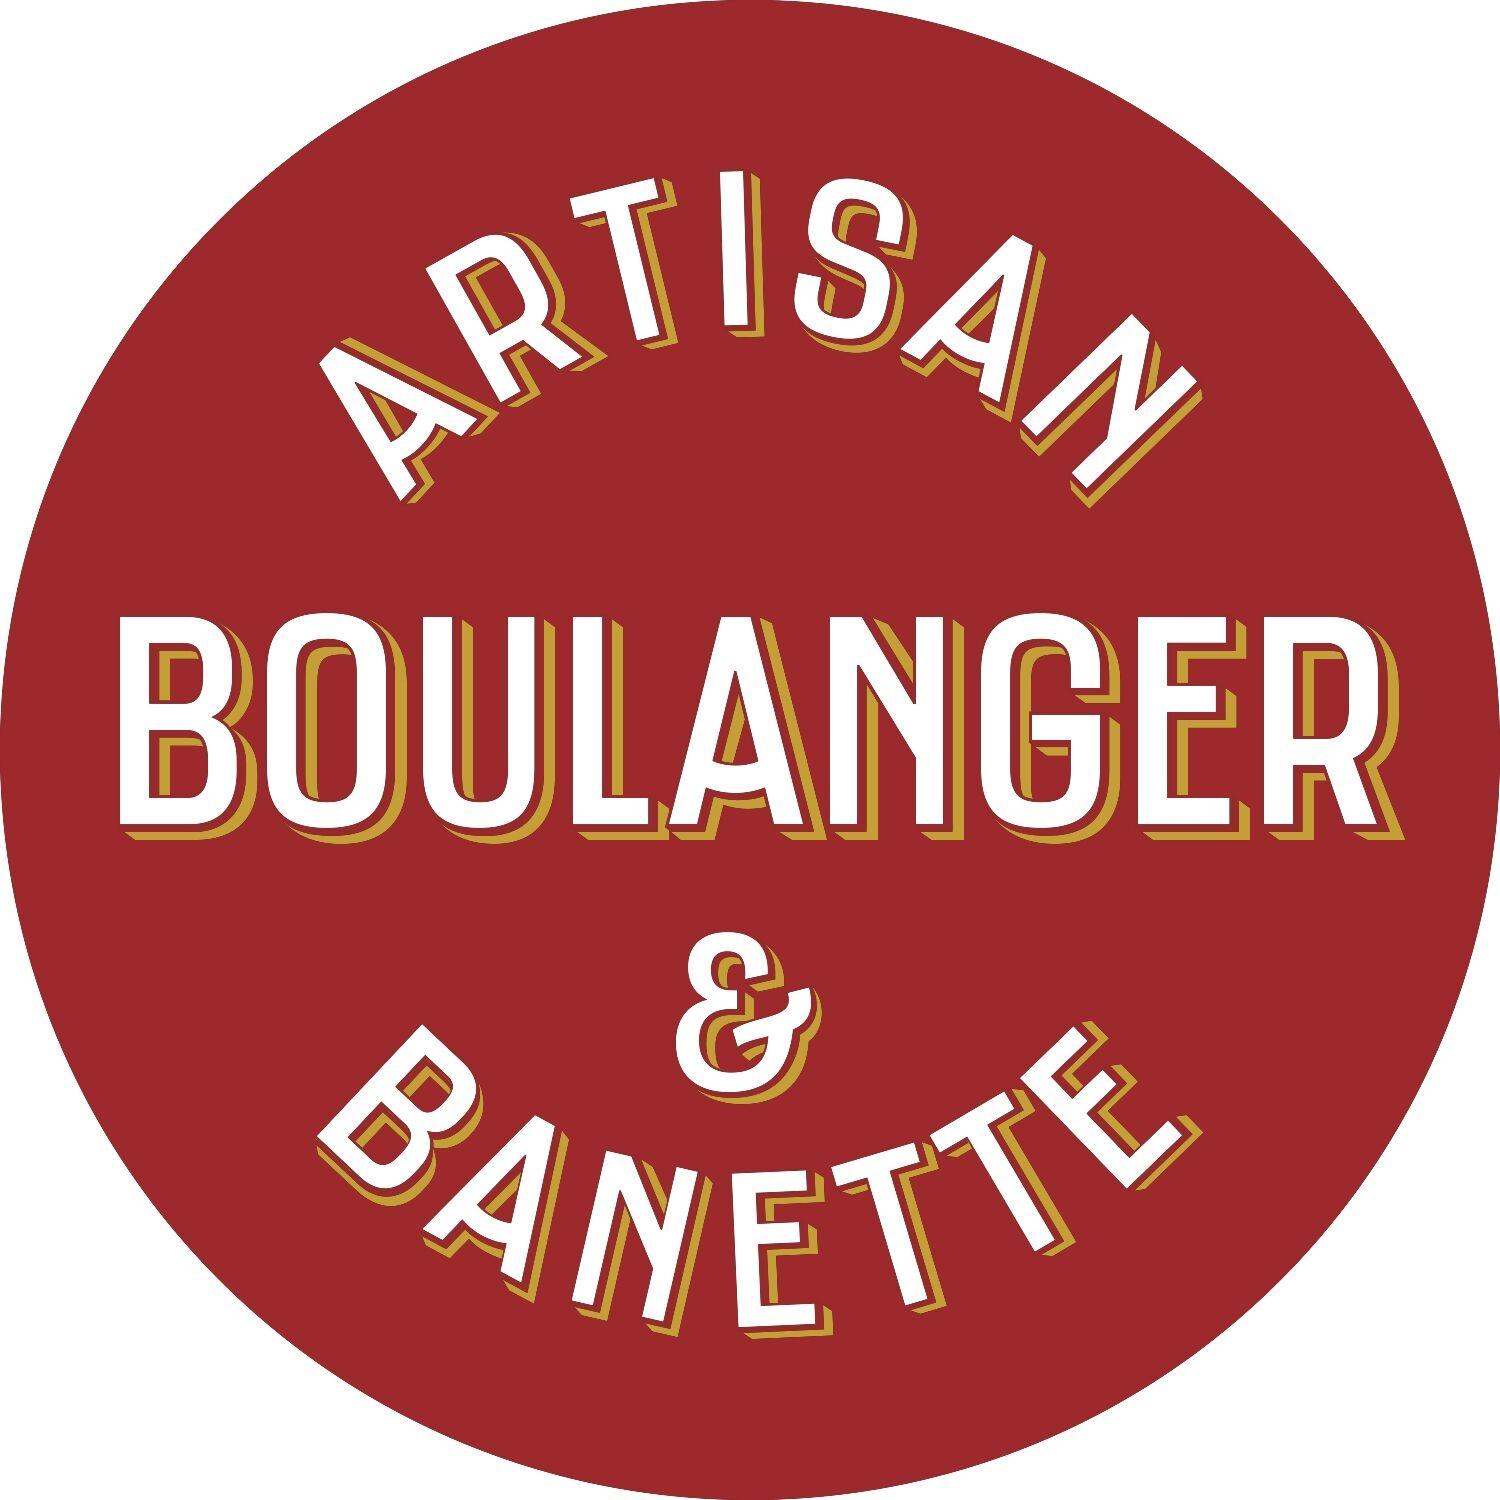 Boulangerie Banette Le Fournil D'ostwald Strasbourg